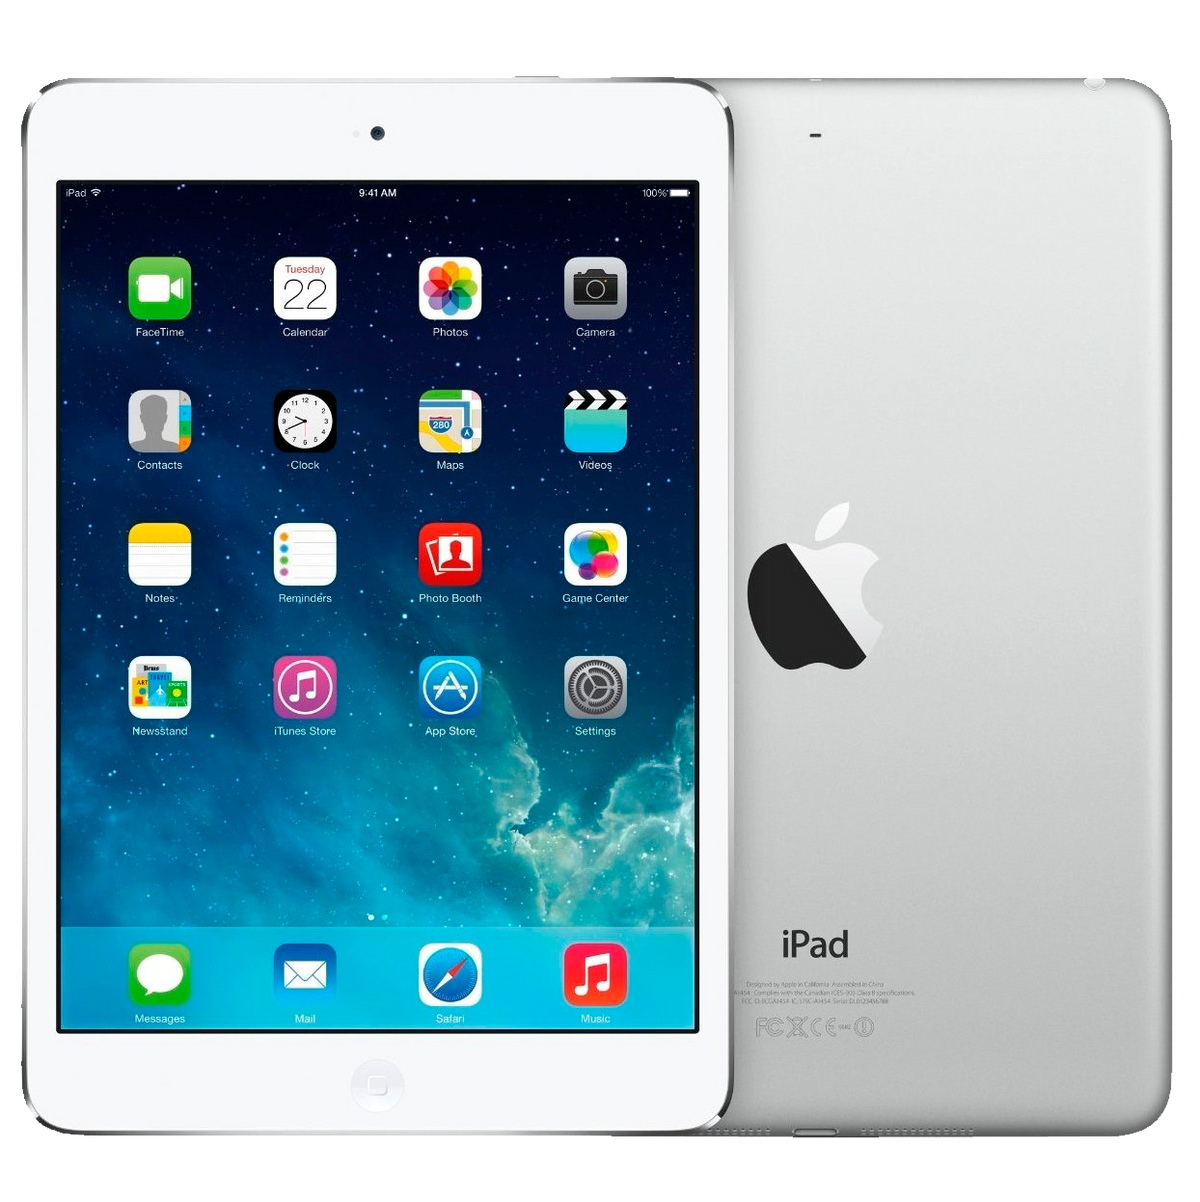 Apple iPad Mini 2 LTE Spacegrau - Ohne Vertrag